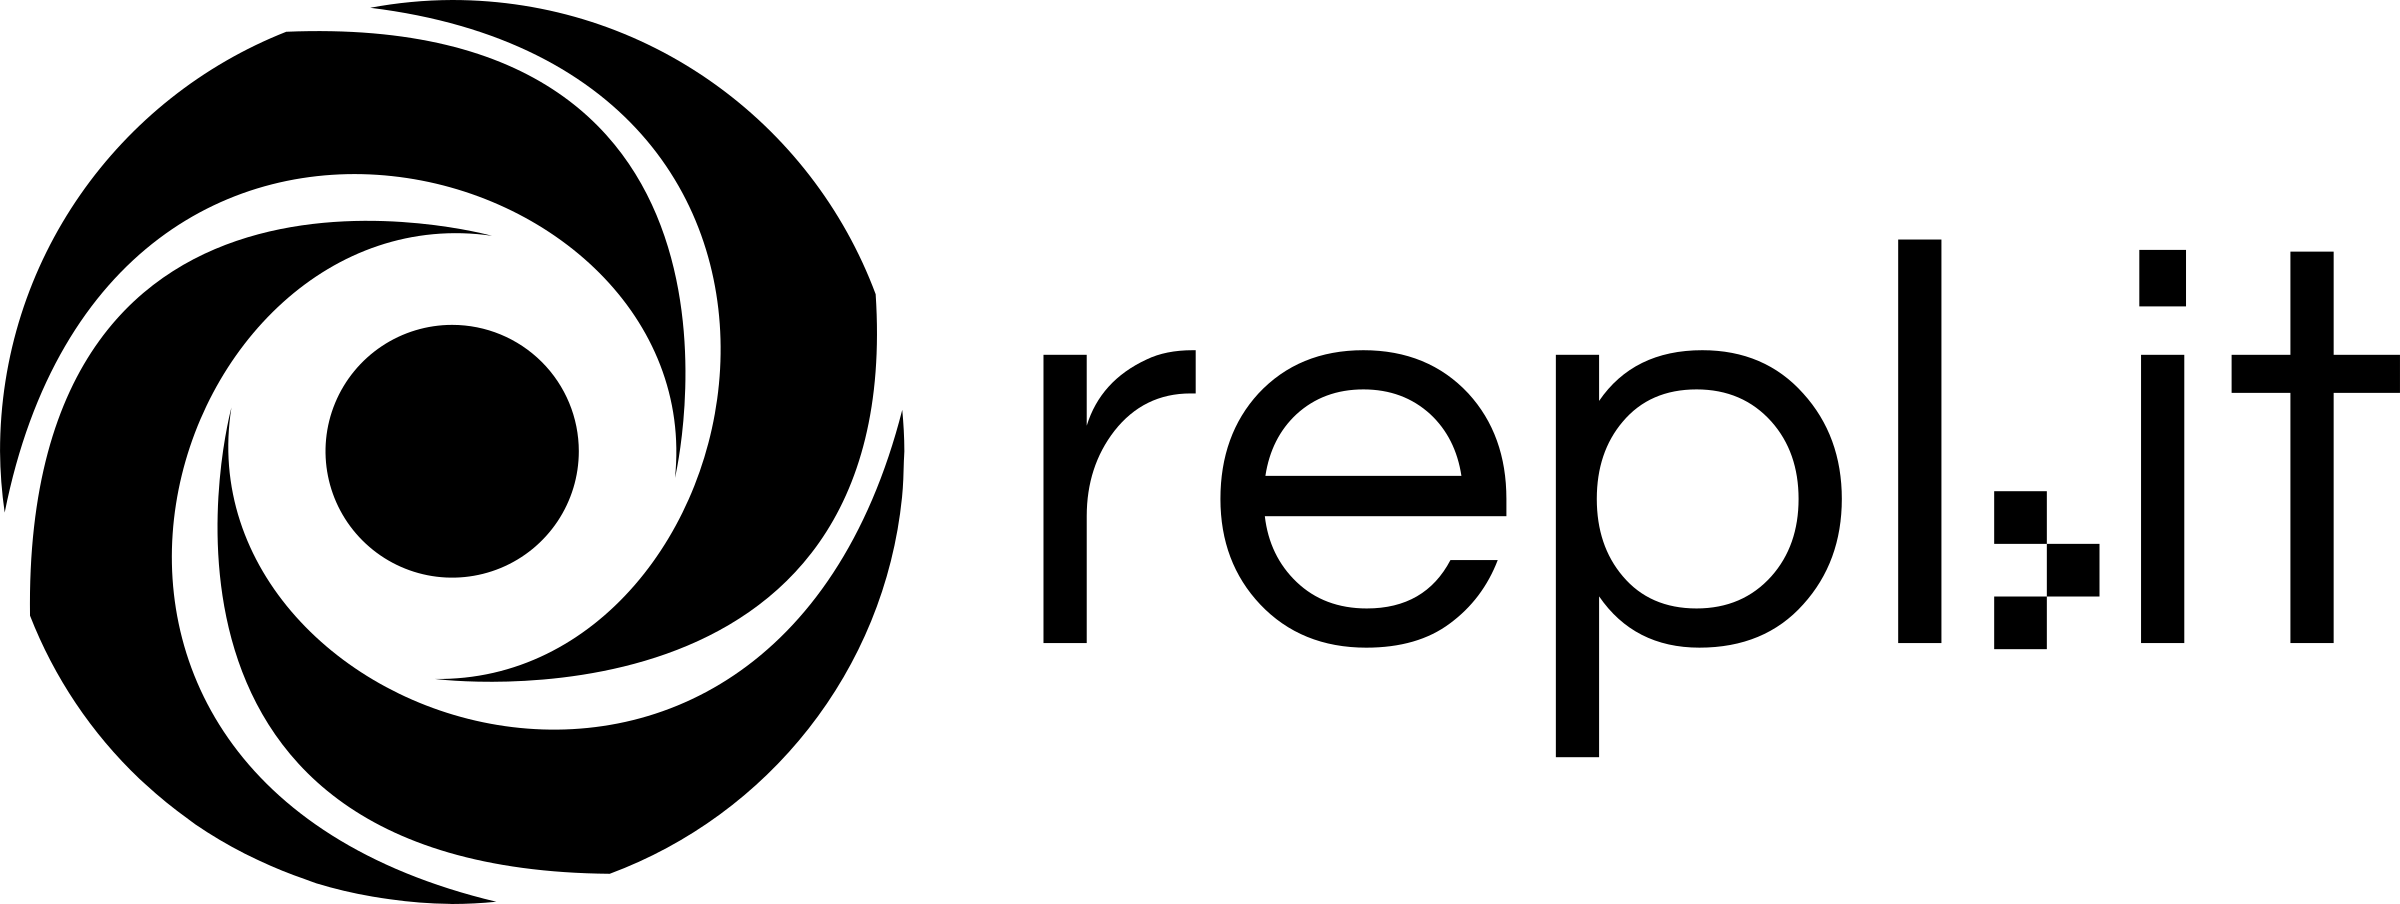 Repl.it Logo